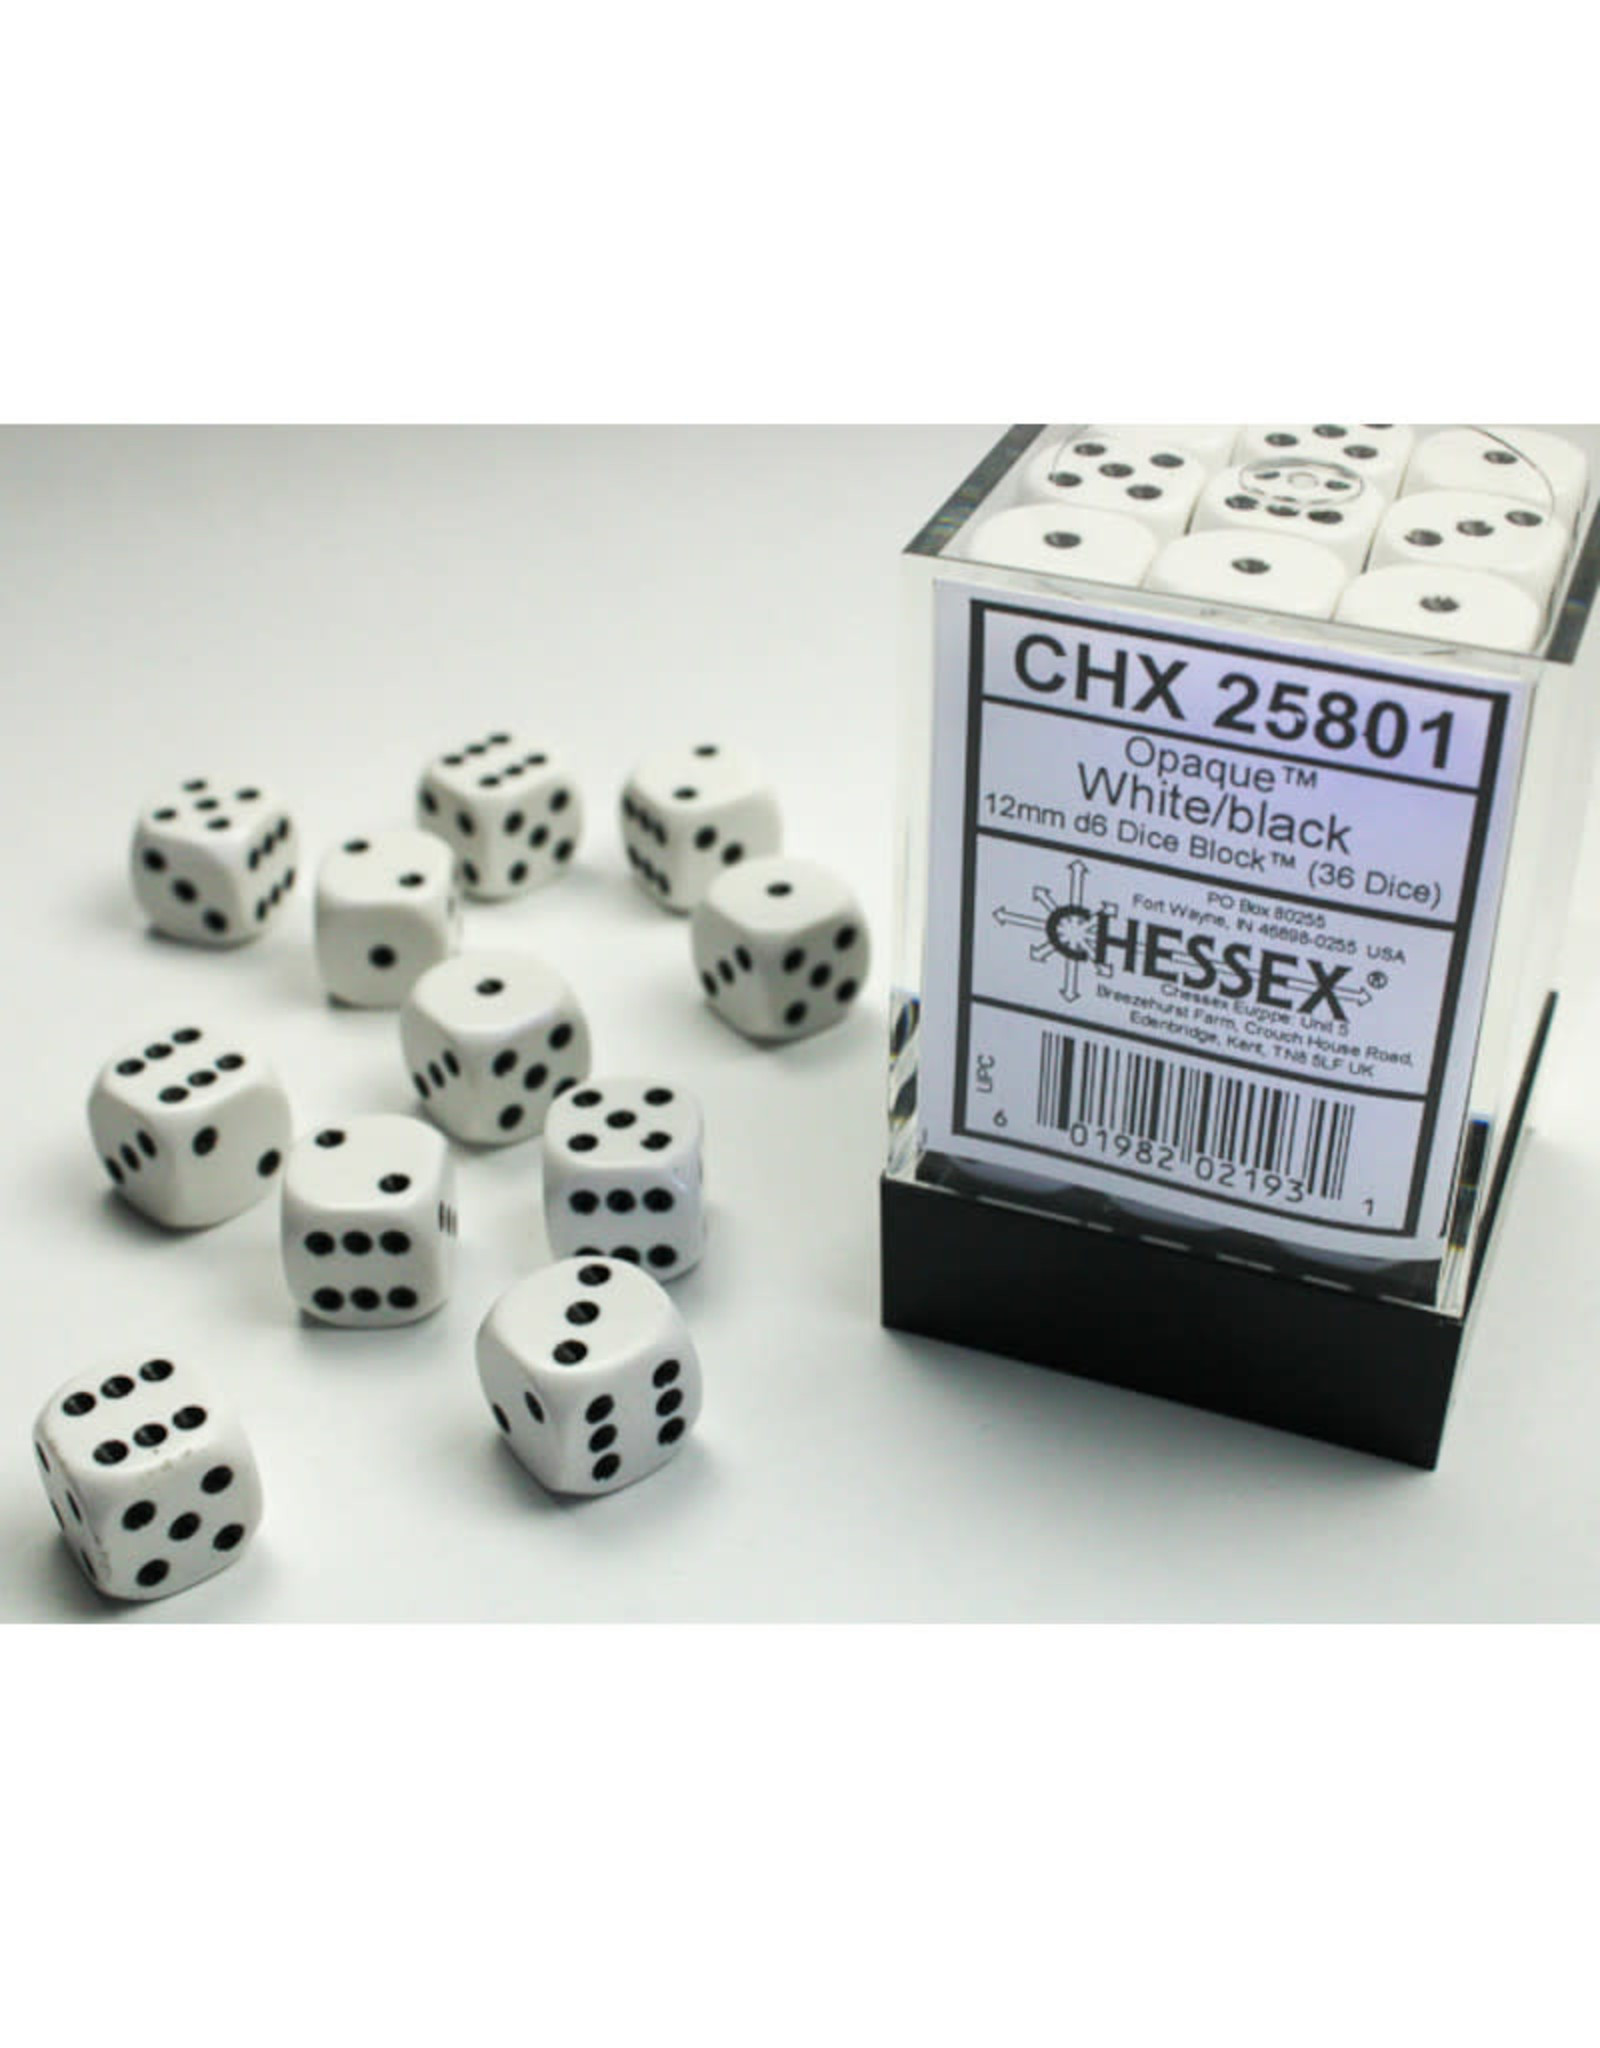 Chessex D6 Dice: 12mm (36) White